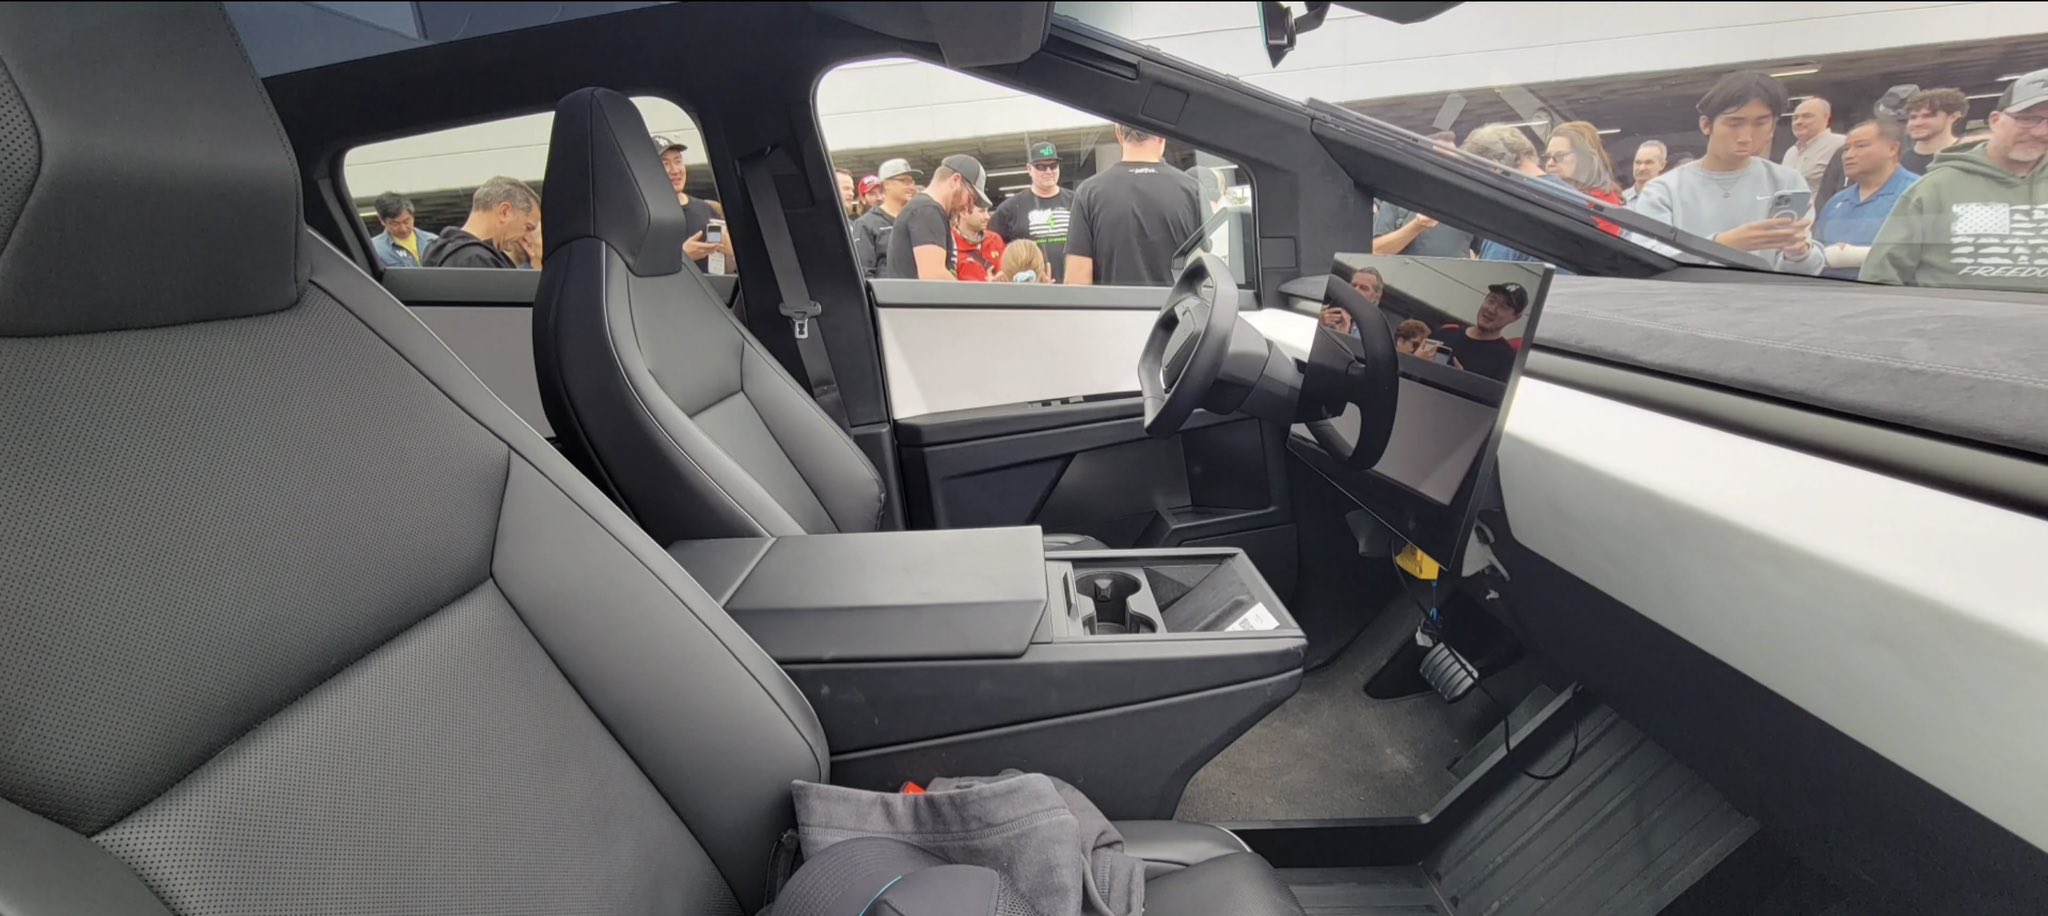 Tesla Cybertruck shows off its interior at US car meet - production EV ...